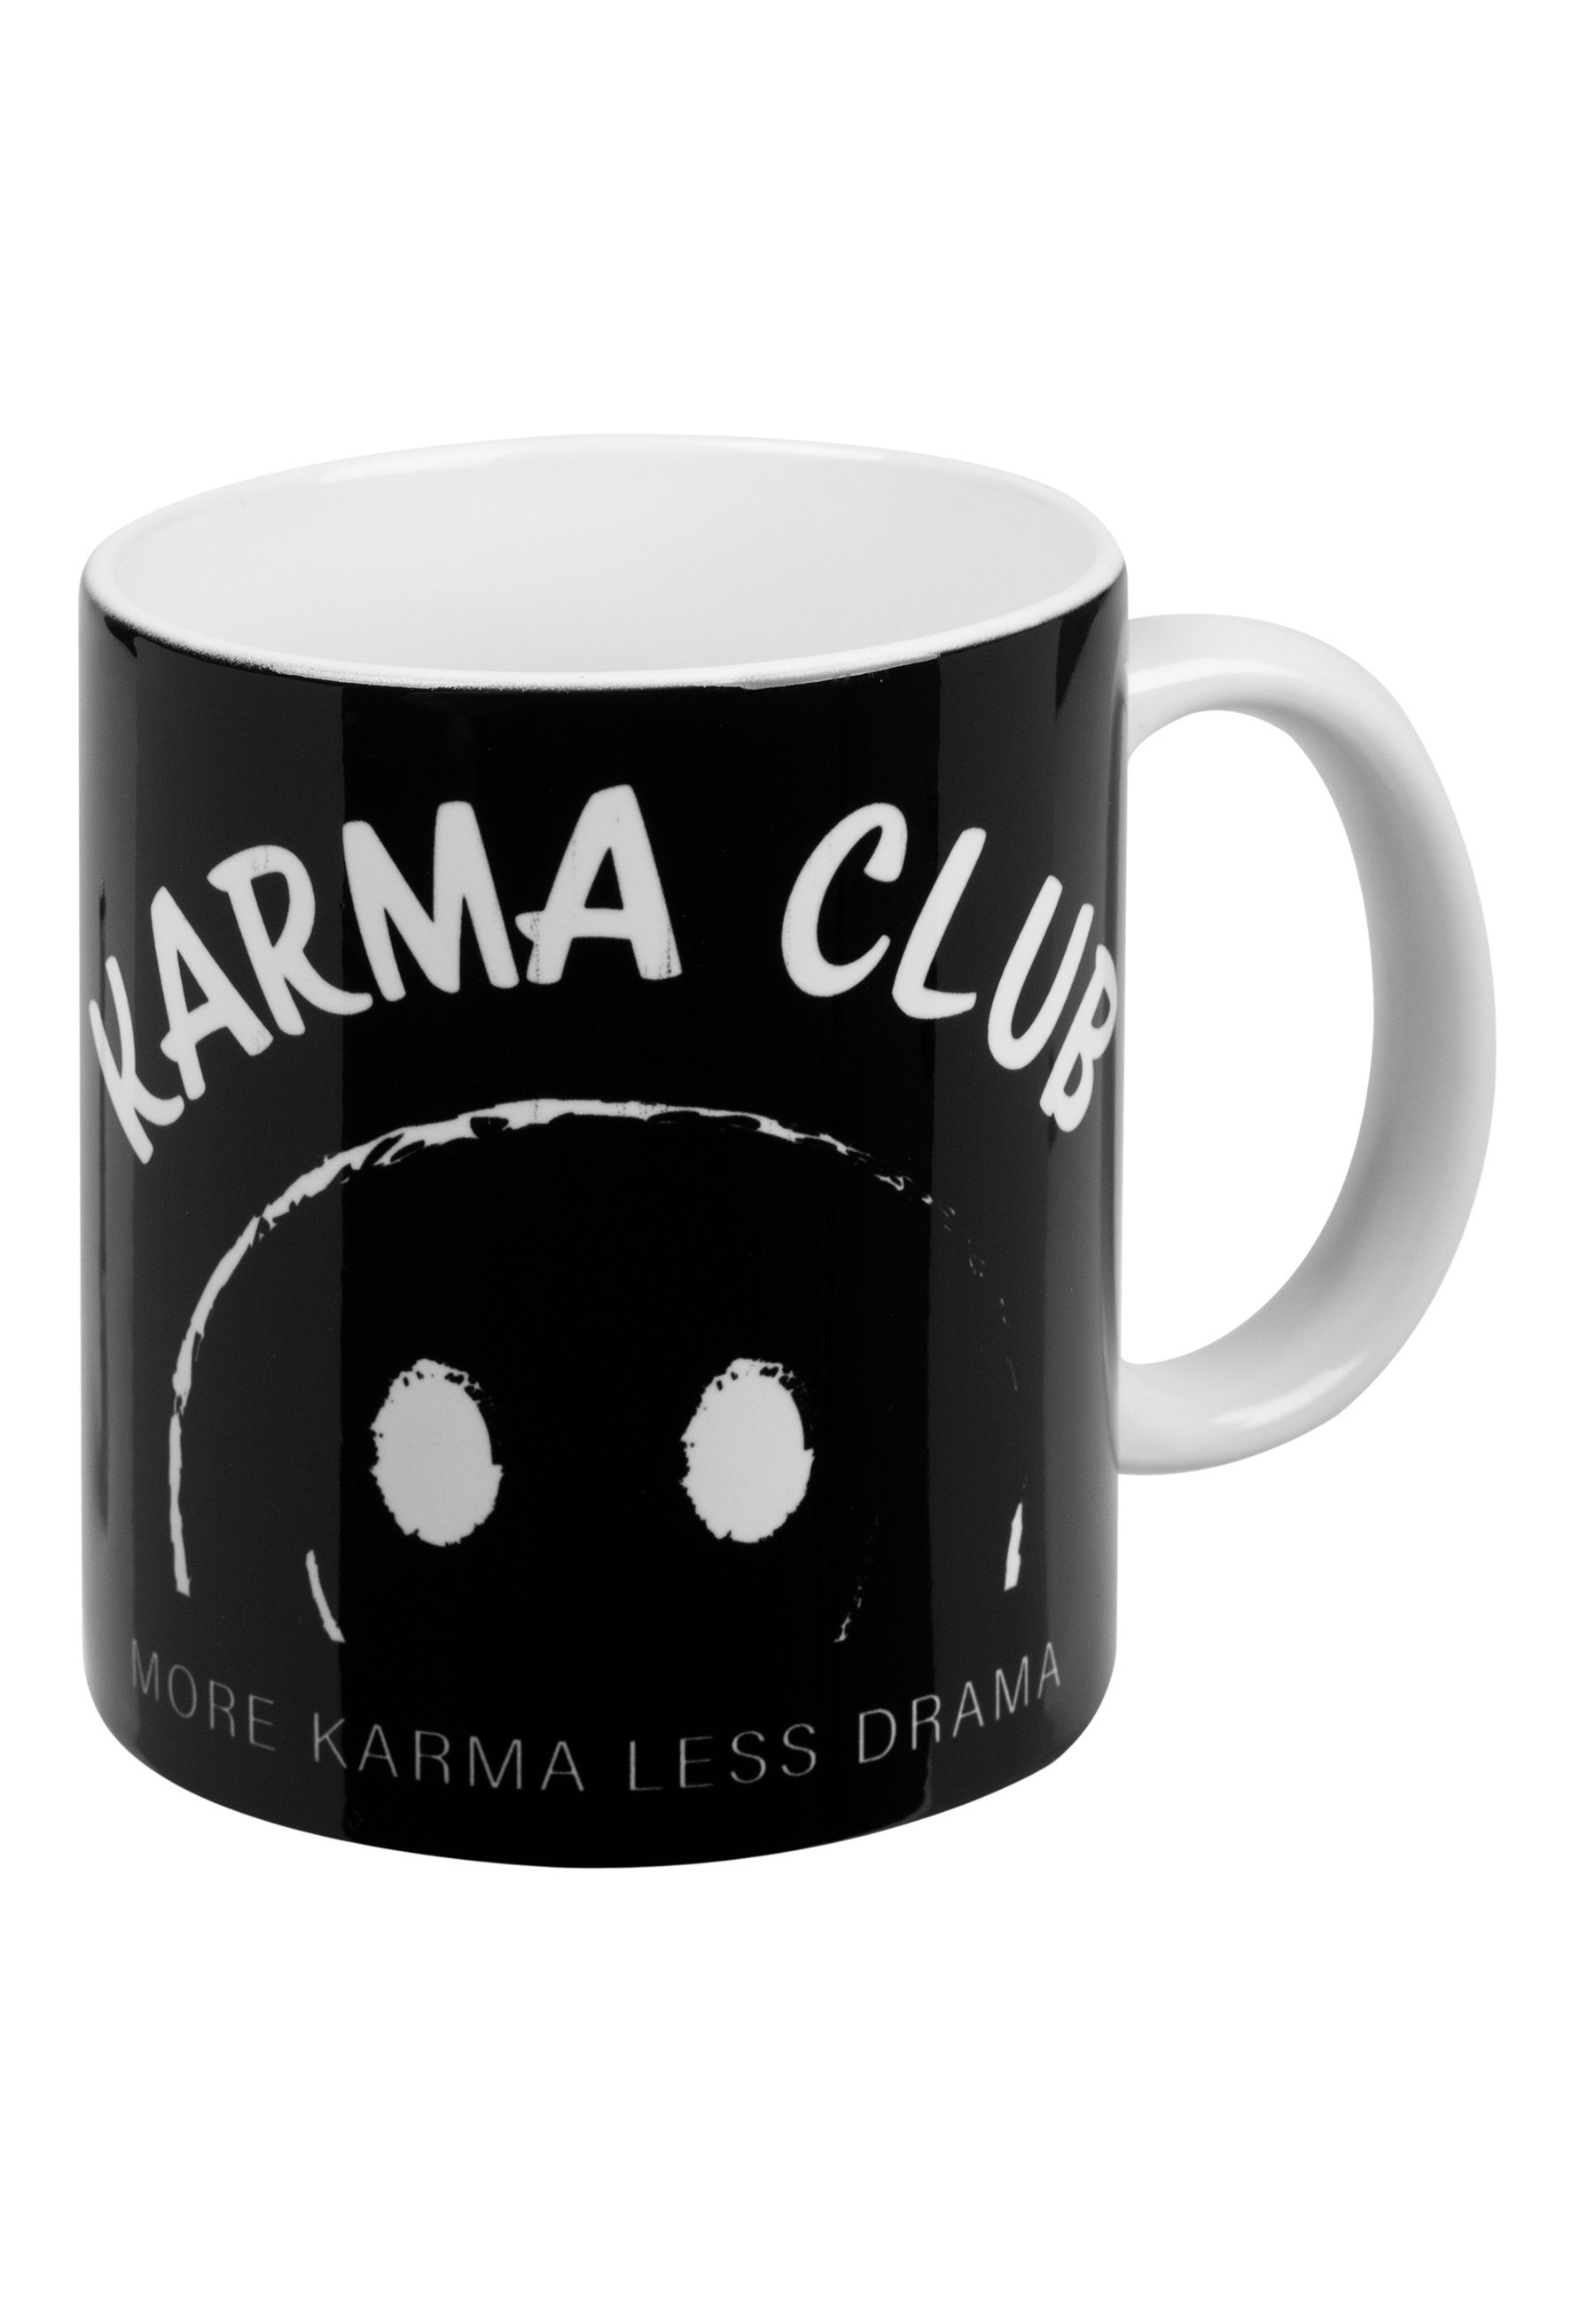 320ml, Tasse Karma Kaffeetasse Schwarz Keramik Keramik United Karma Labels® Club Tasse - Becher